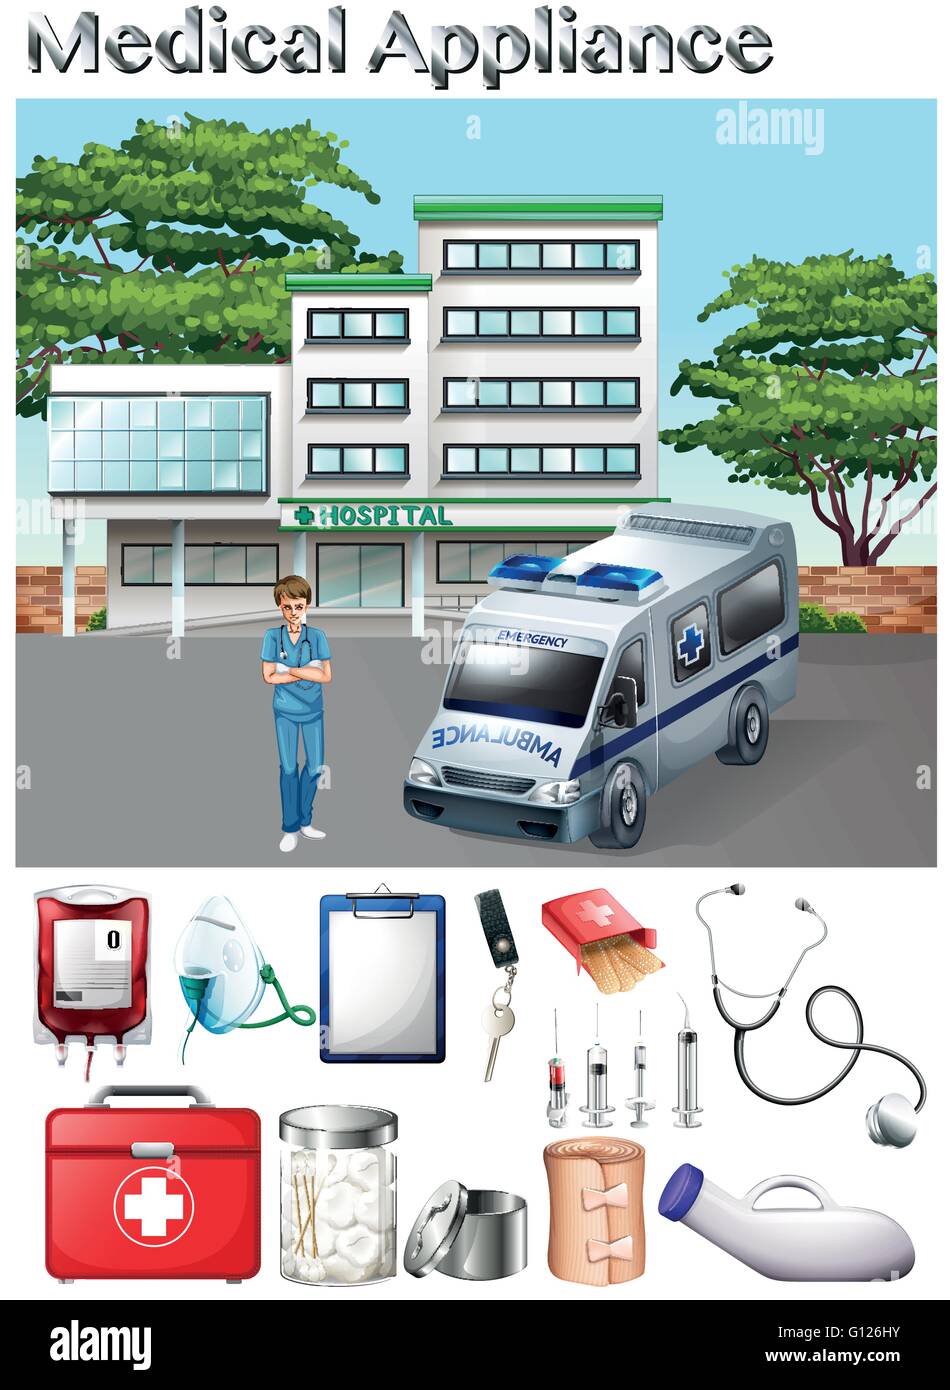 Medical appliance and hospital scene illustration Stock Vector